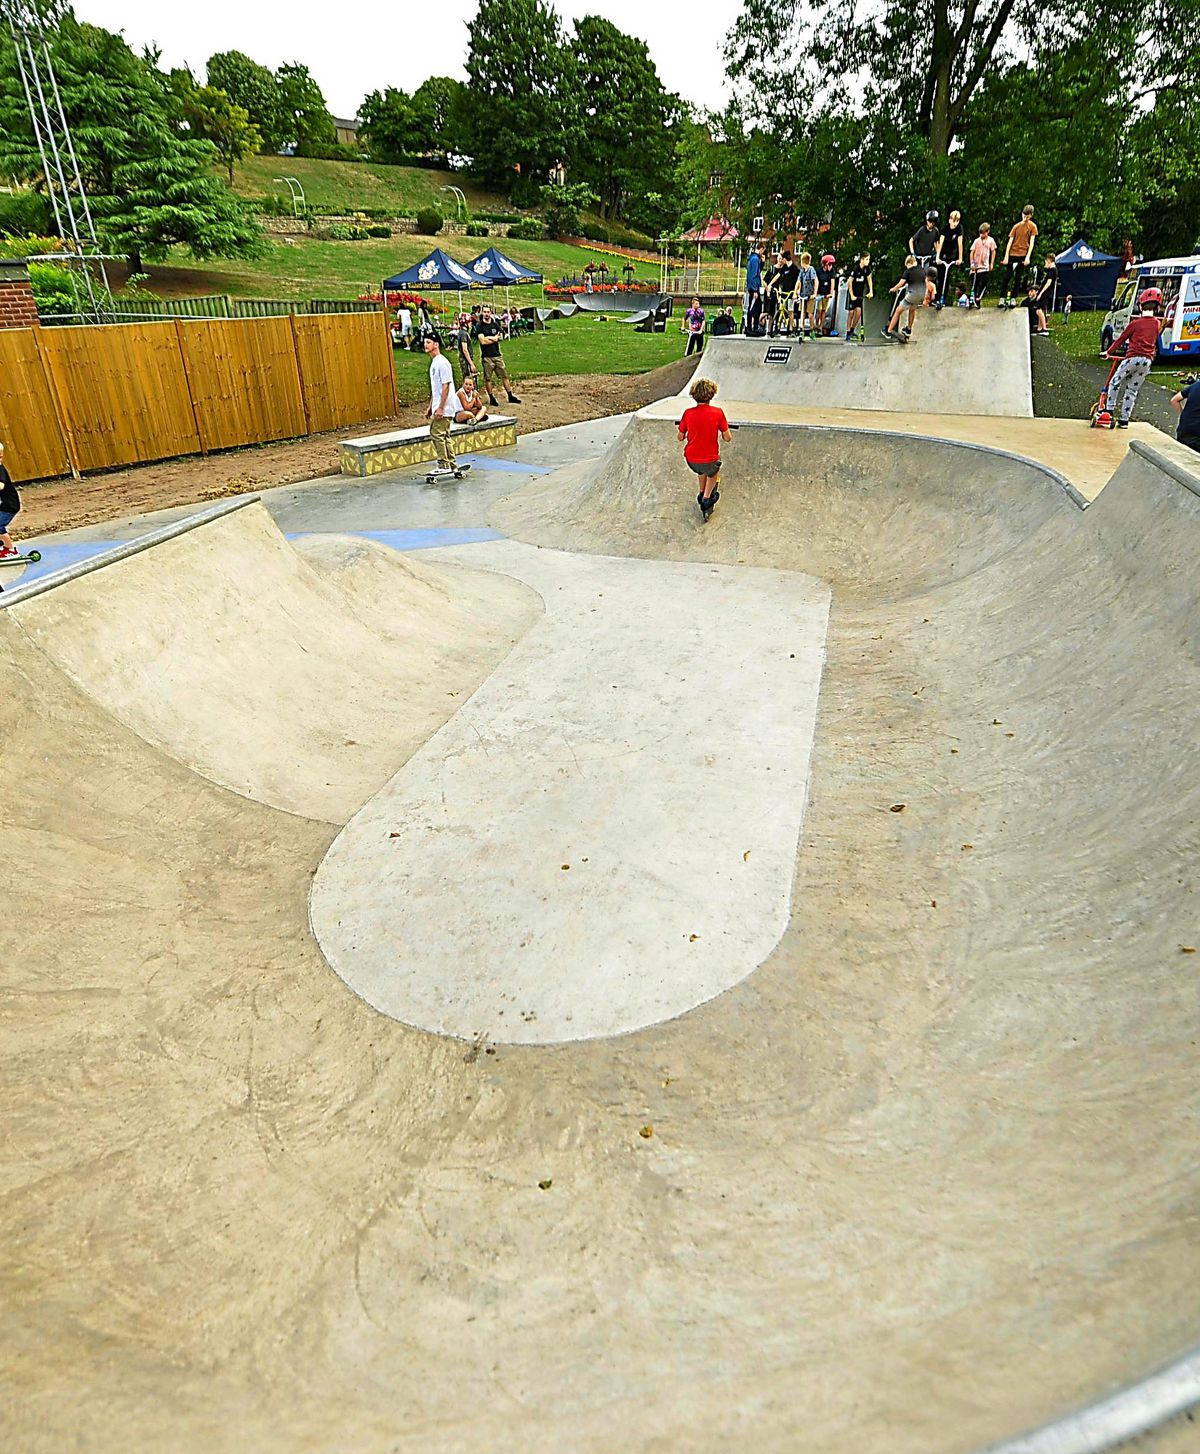 whitchurch skatepark review tips skateboarding in hampshire u k